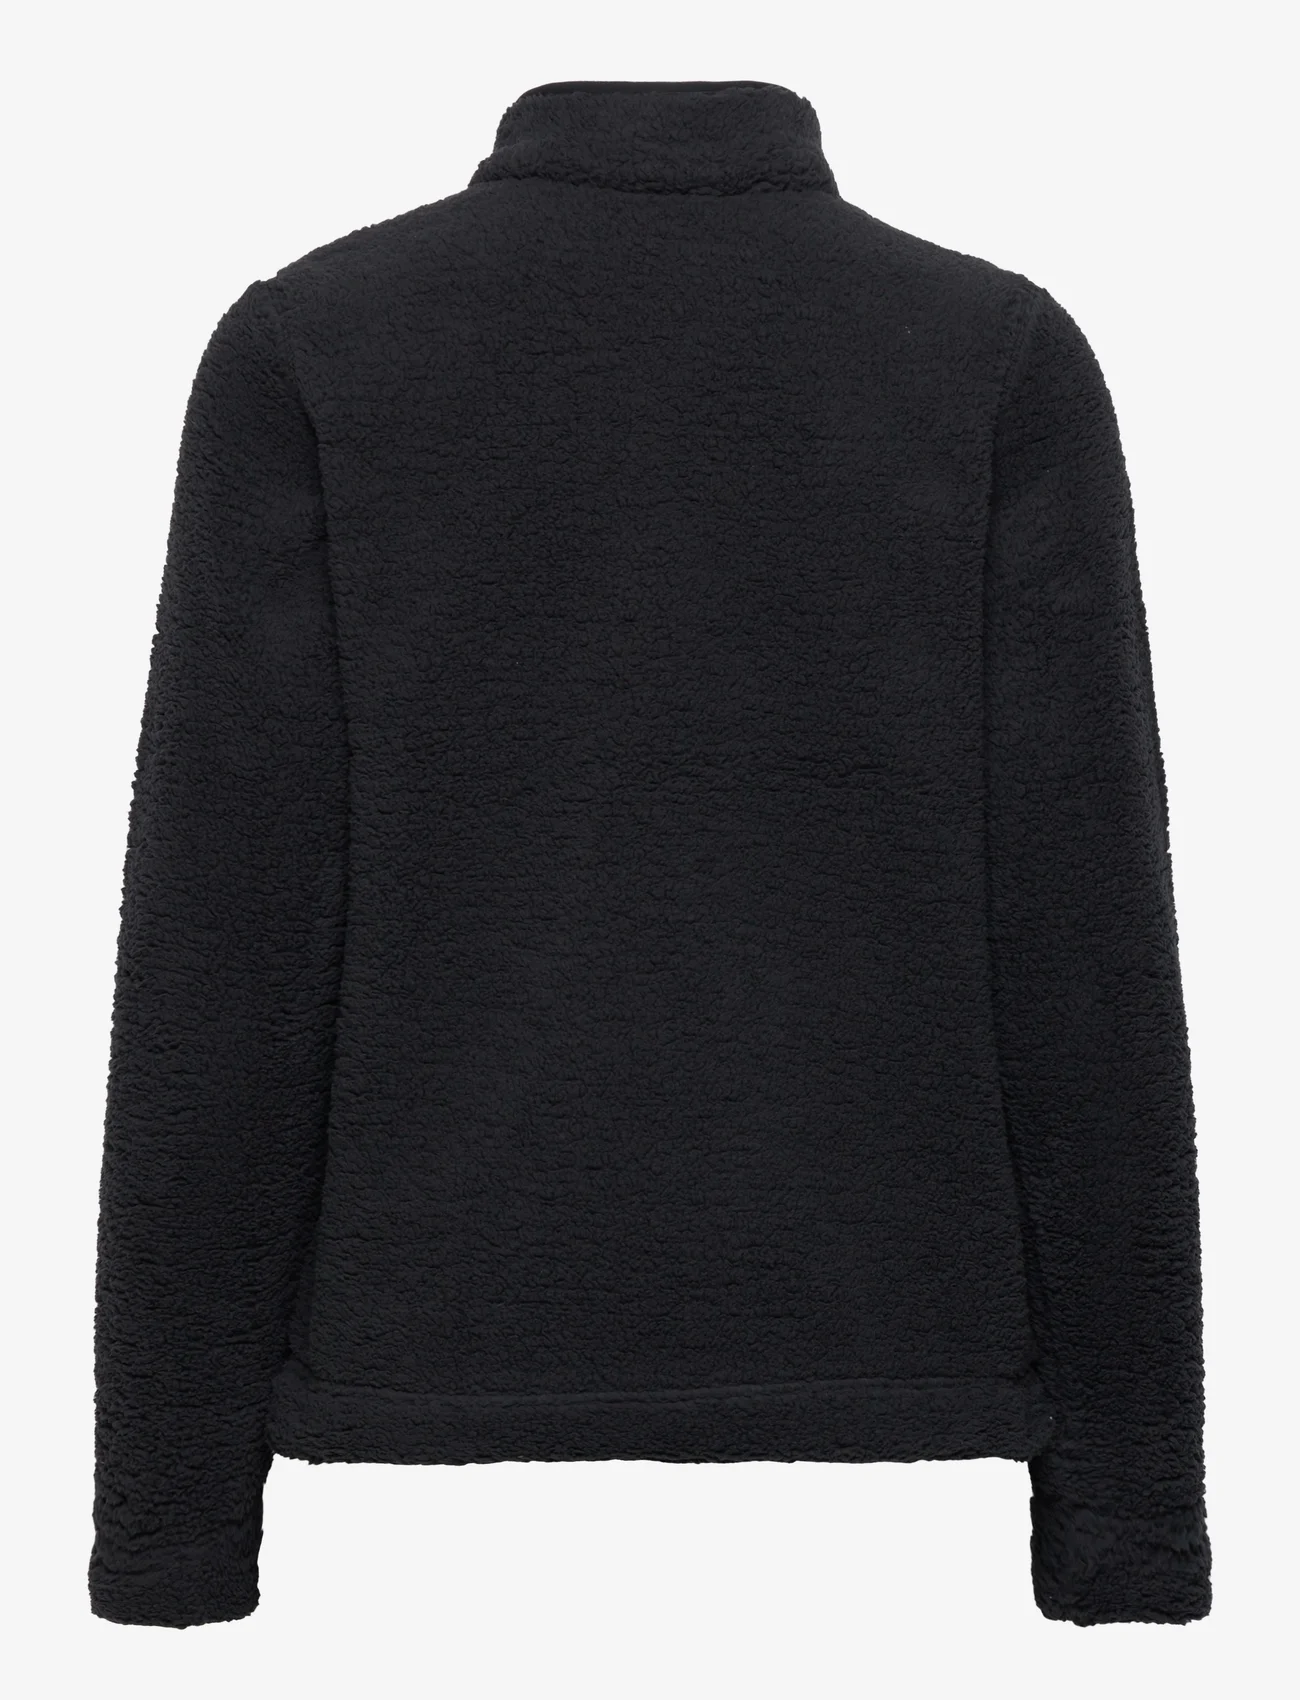 Columbia Sportswear - West Bend 1/4 Zip Pullover - mellomlagsjakker - black, black - 1